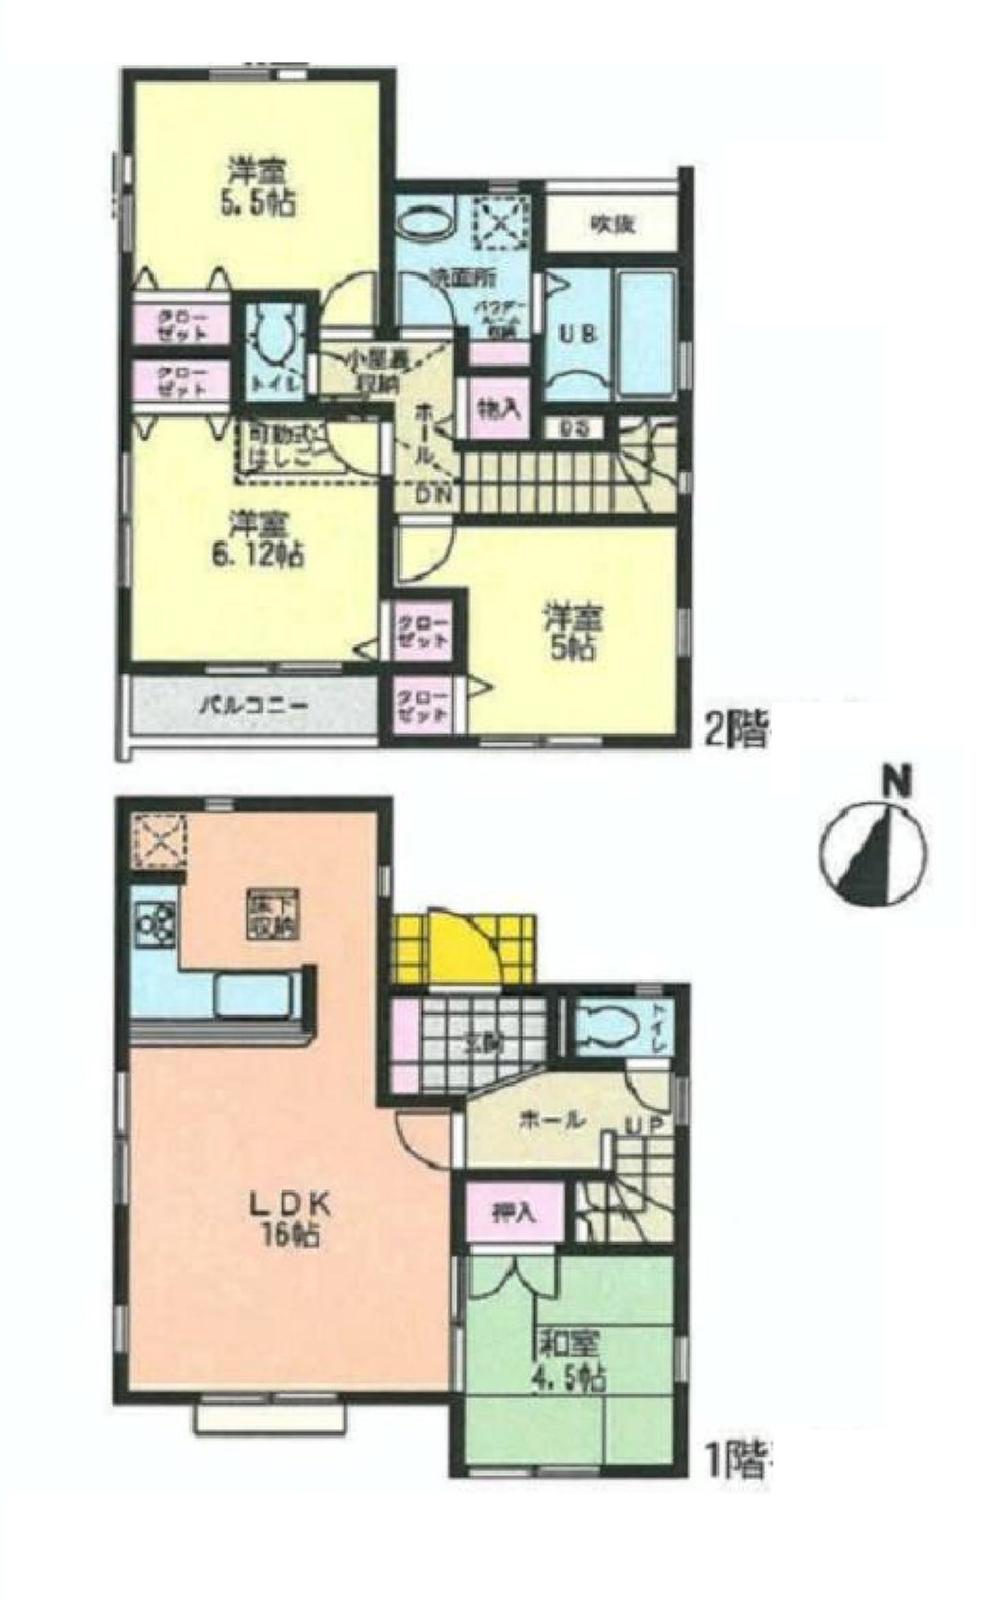 Floor plan. (7 Building), Price 29,800,000 yen, 4LDK, Land area 125.2 sq m , Building area 90.25 sq m